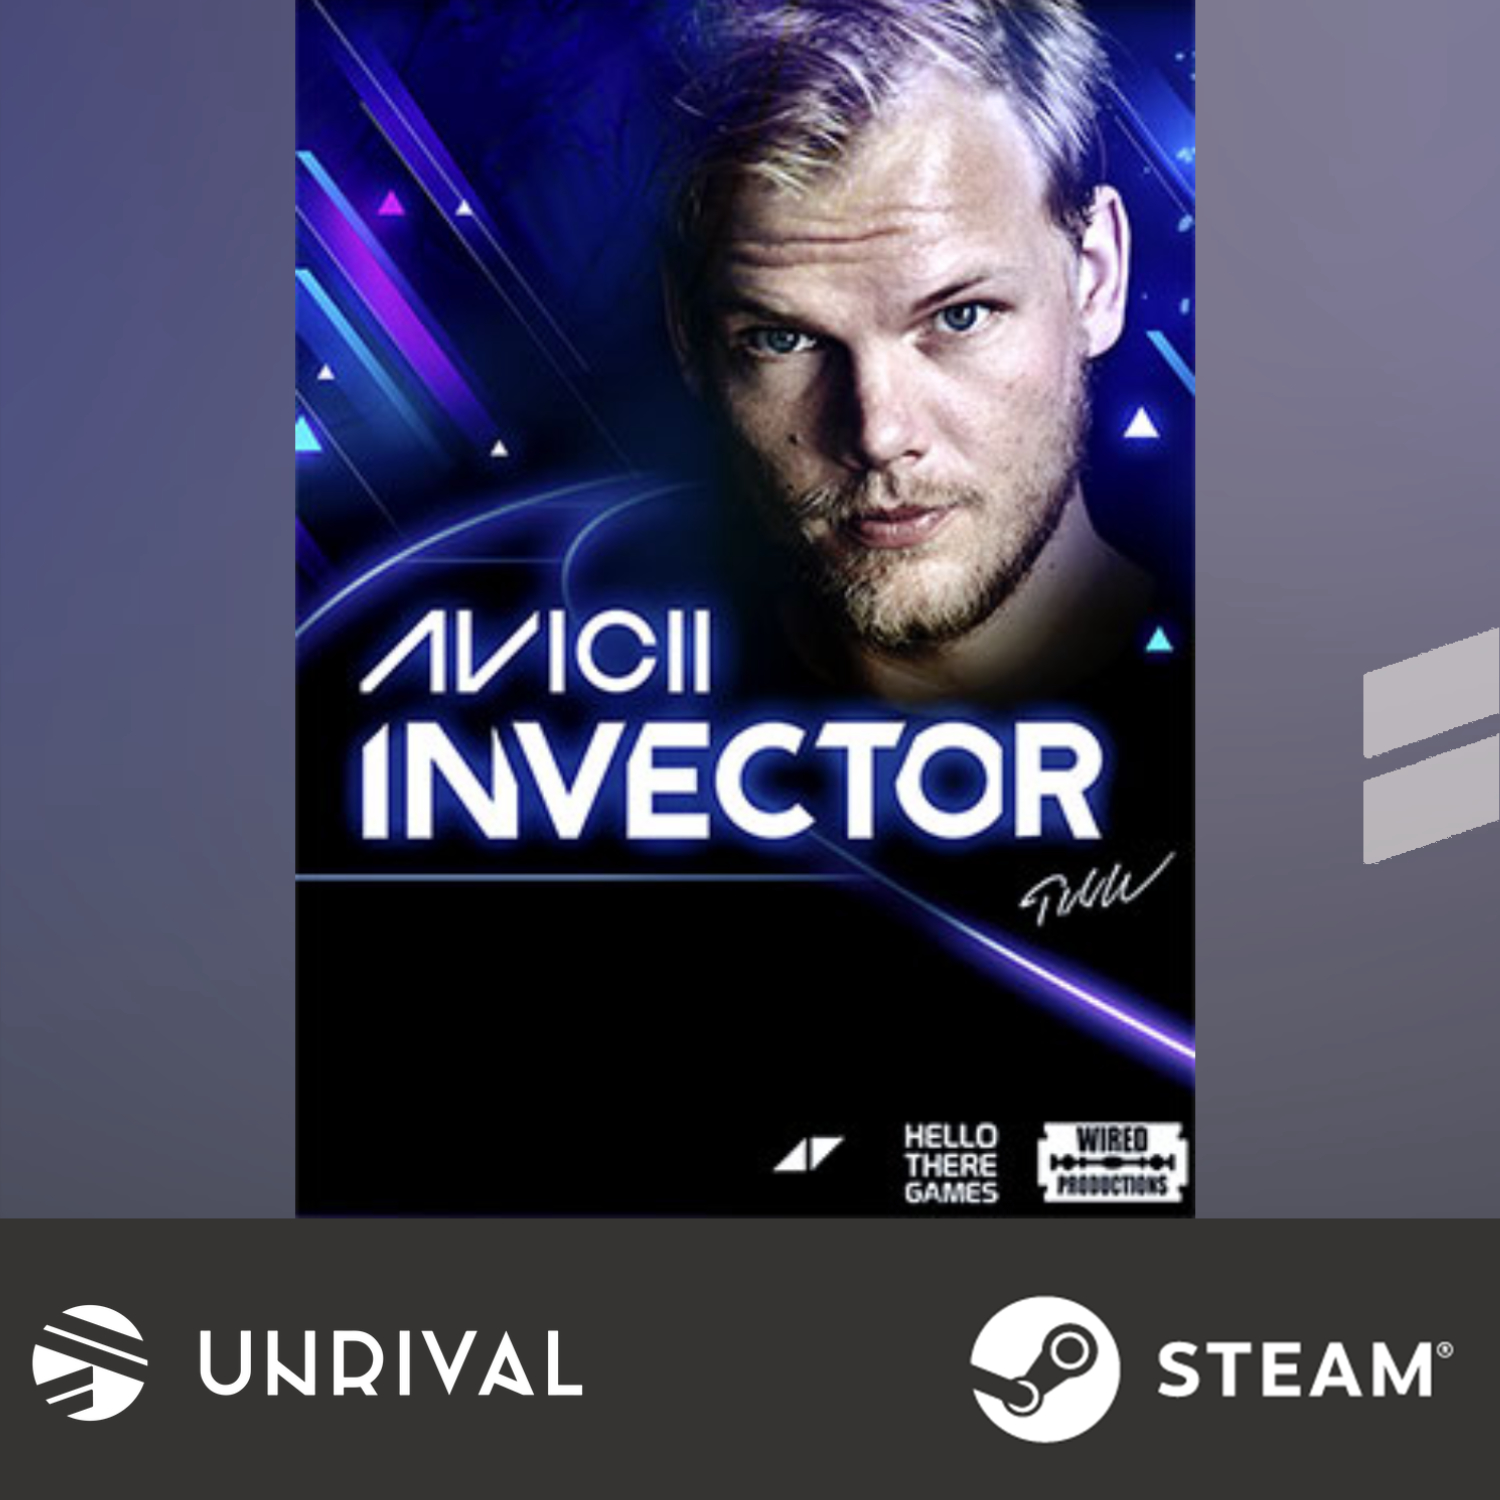 AVICII Invector PC Digital Download Game (Multiplayer) - Unrival